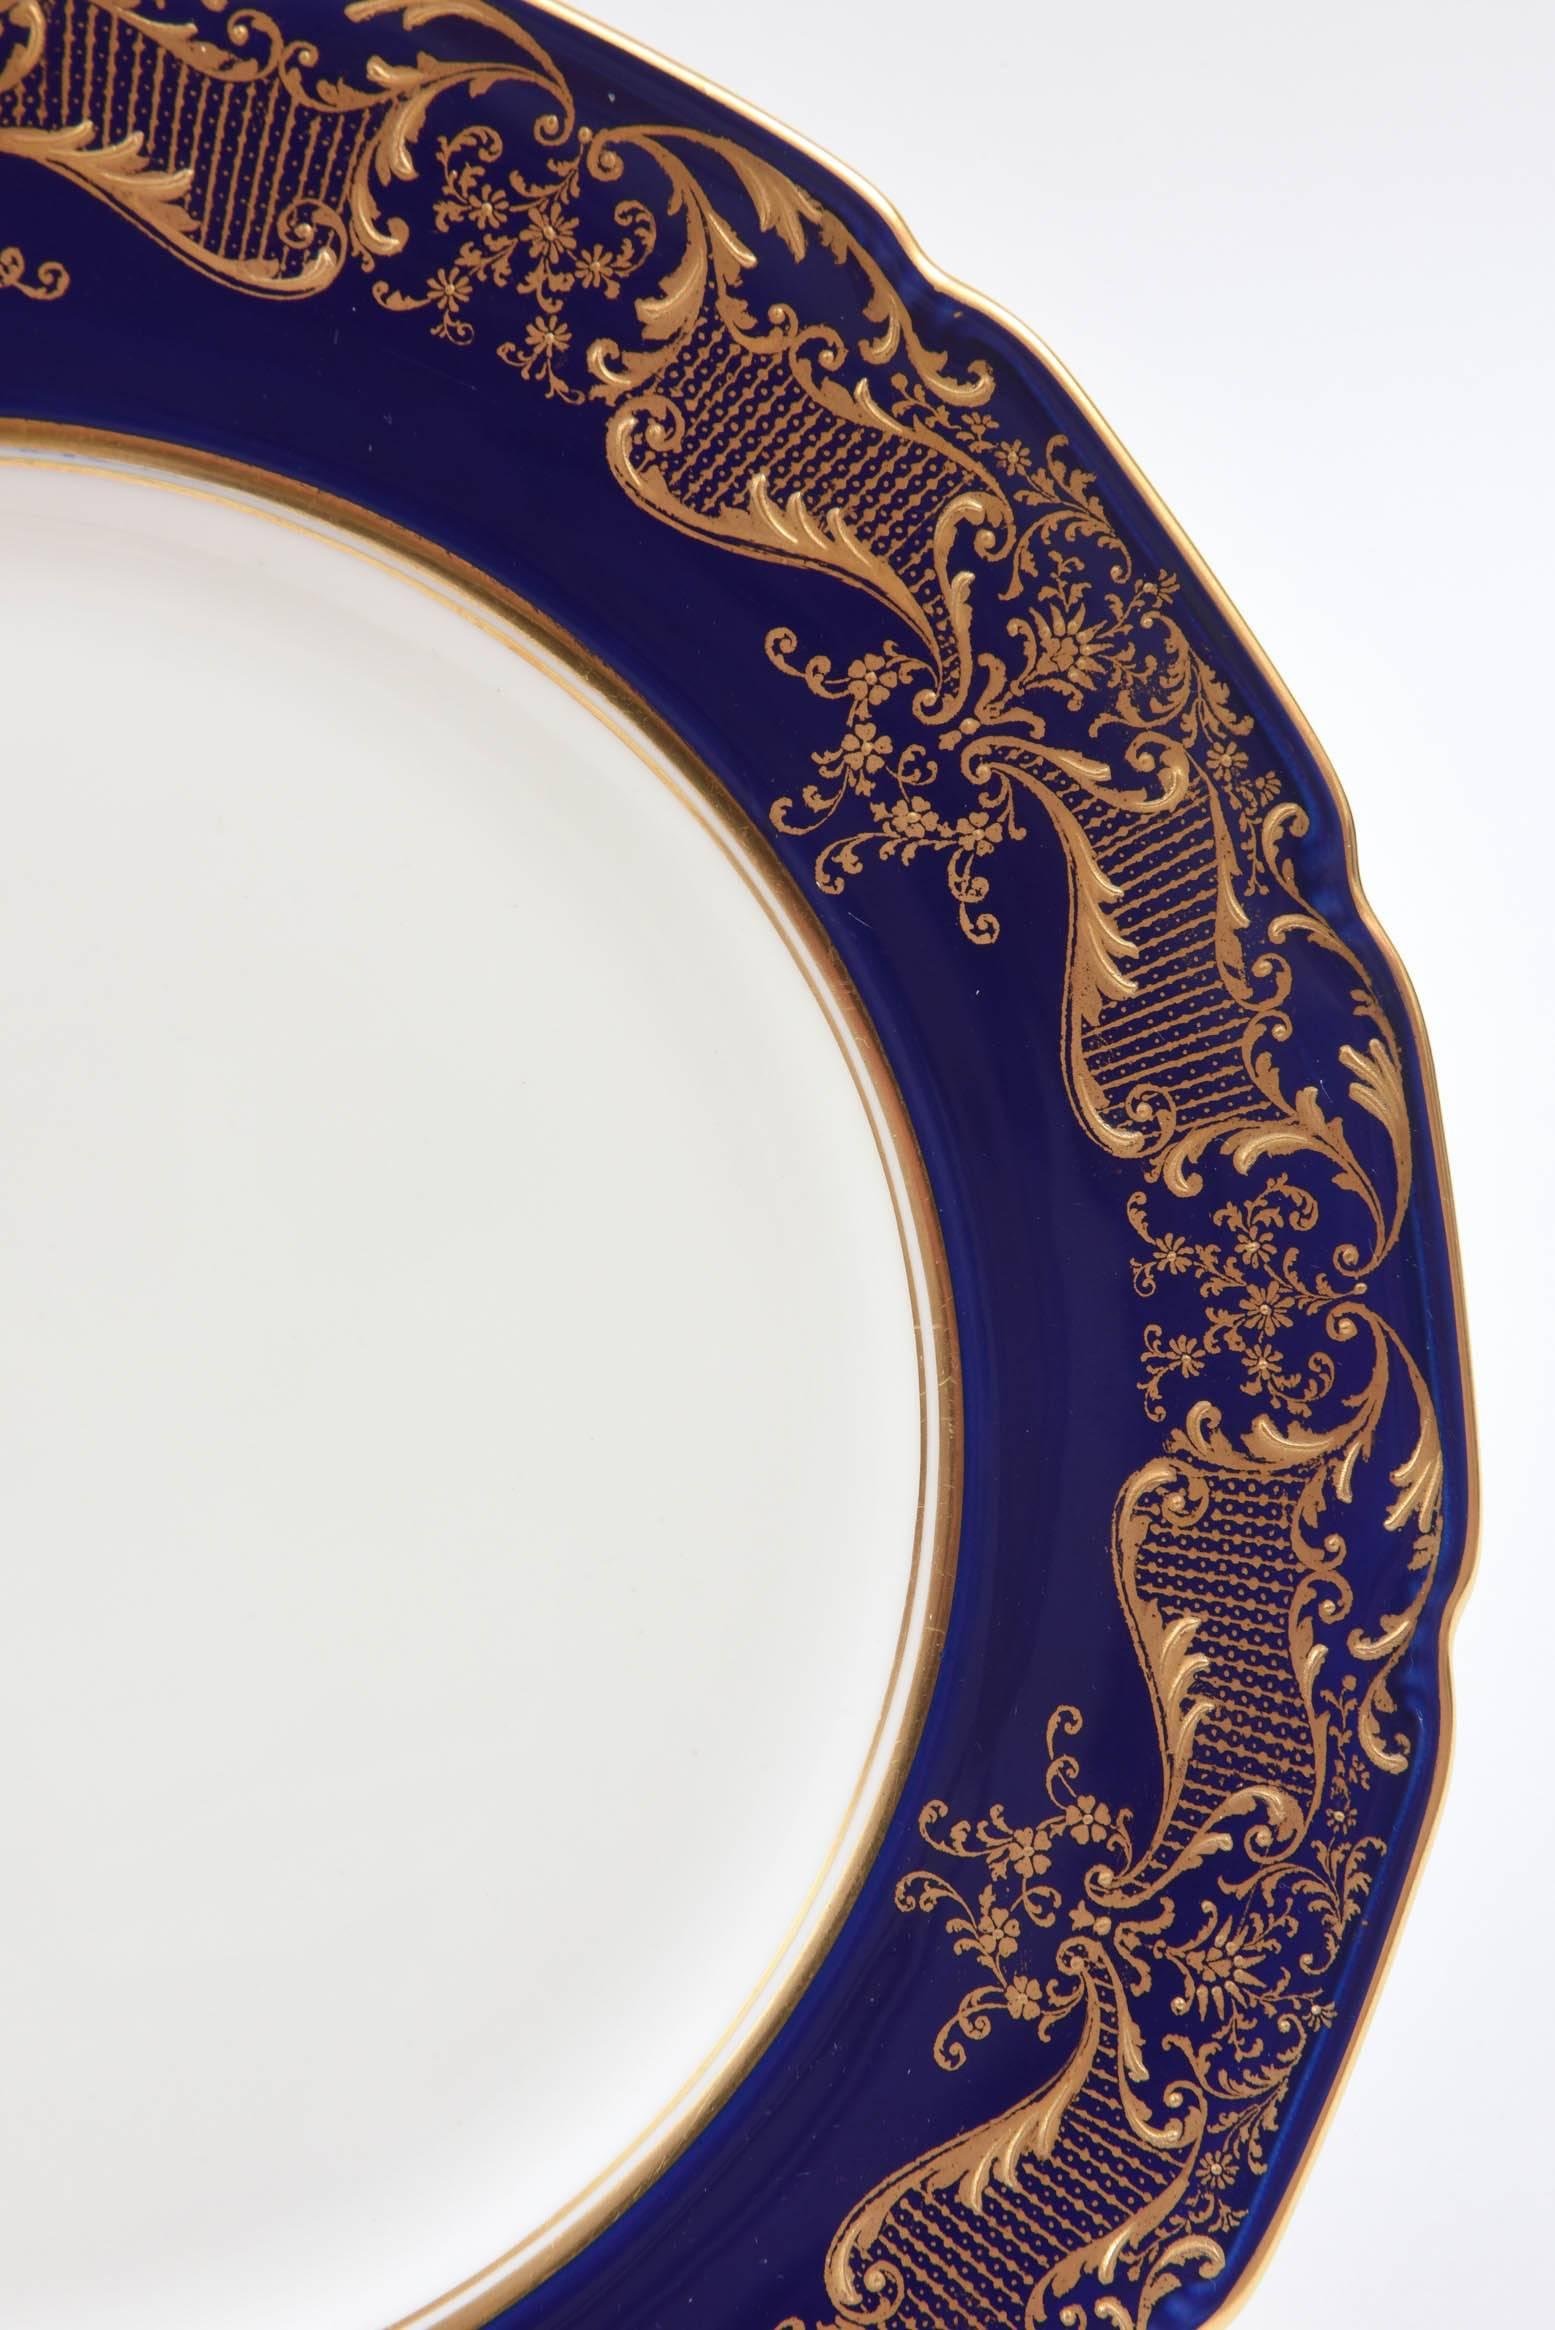 12 Antique Dinner Plates, Cobalt Blue and Gilt Encrusted, England Scalloped Edge 1